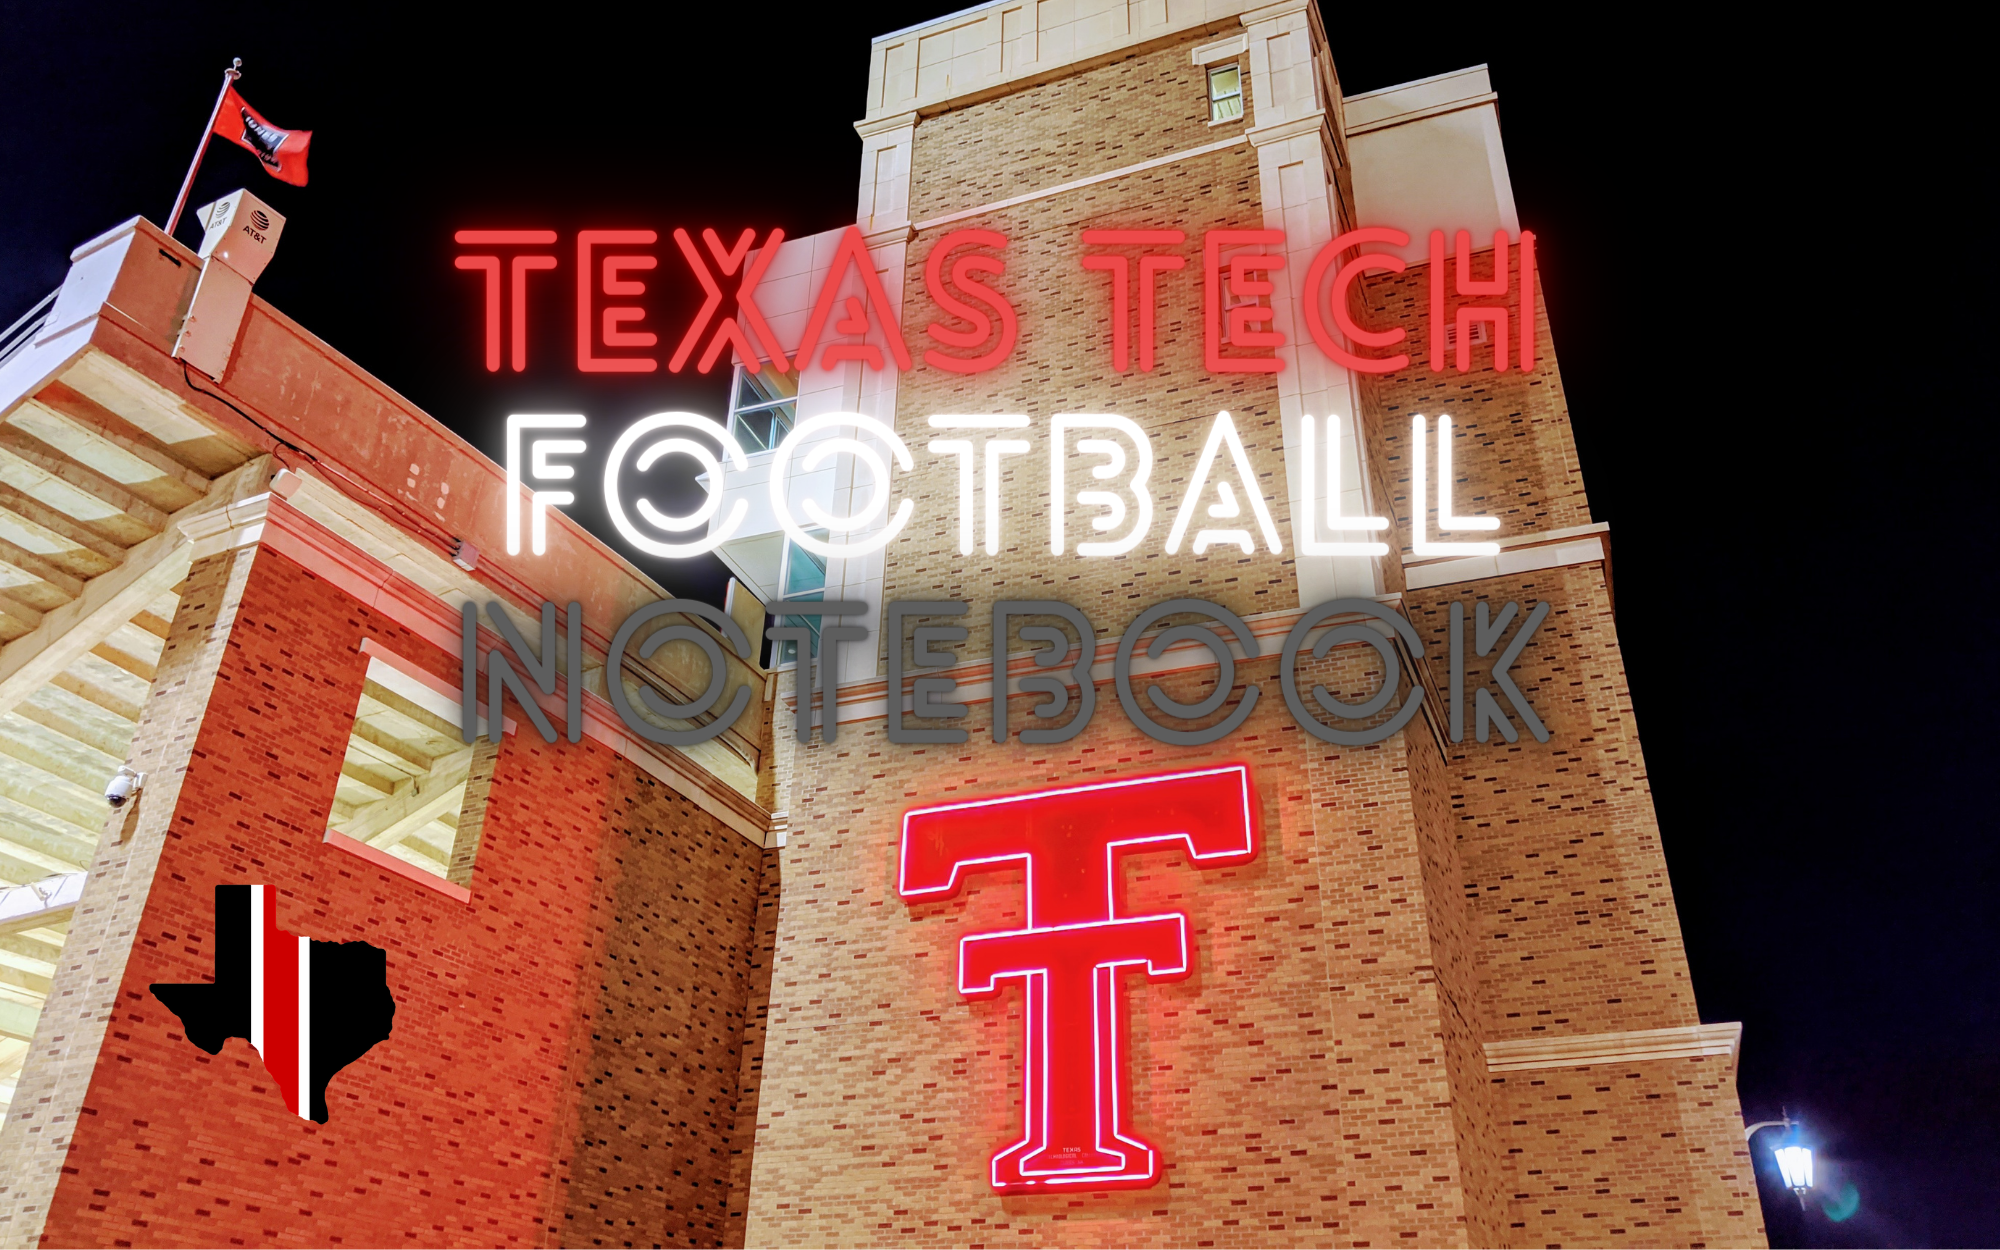 Texas Tech Football Notebook: First Day of Pads